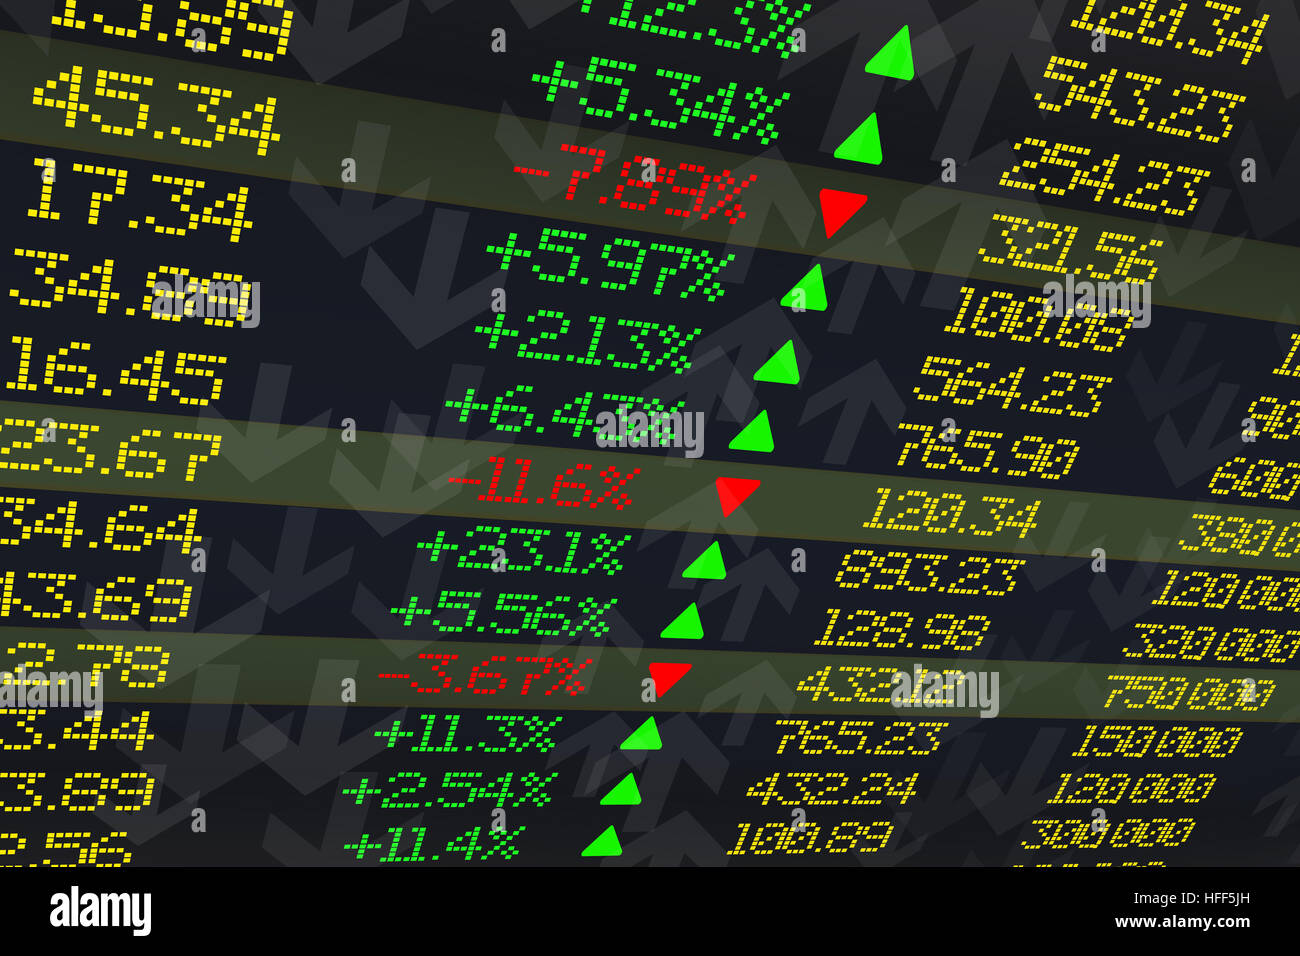 High resolution stock exchange evolution panel Stock Photo